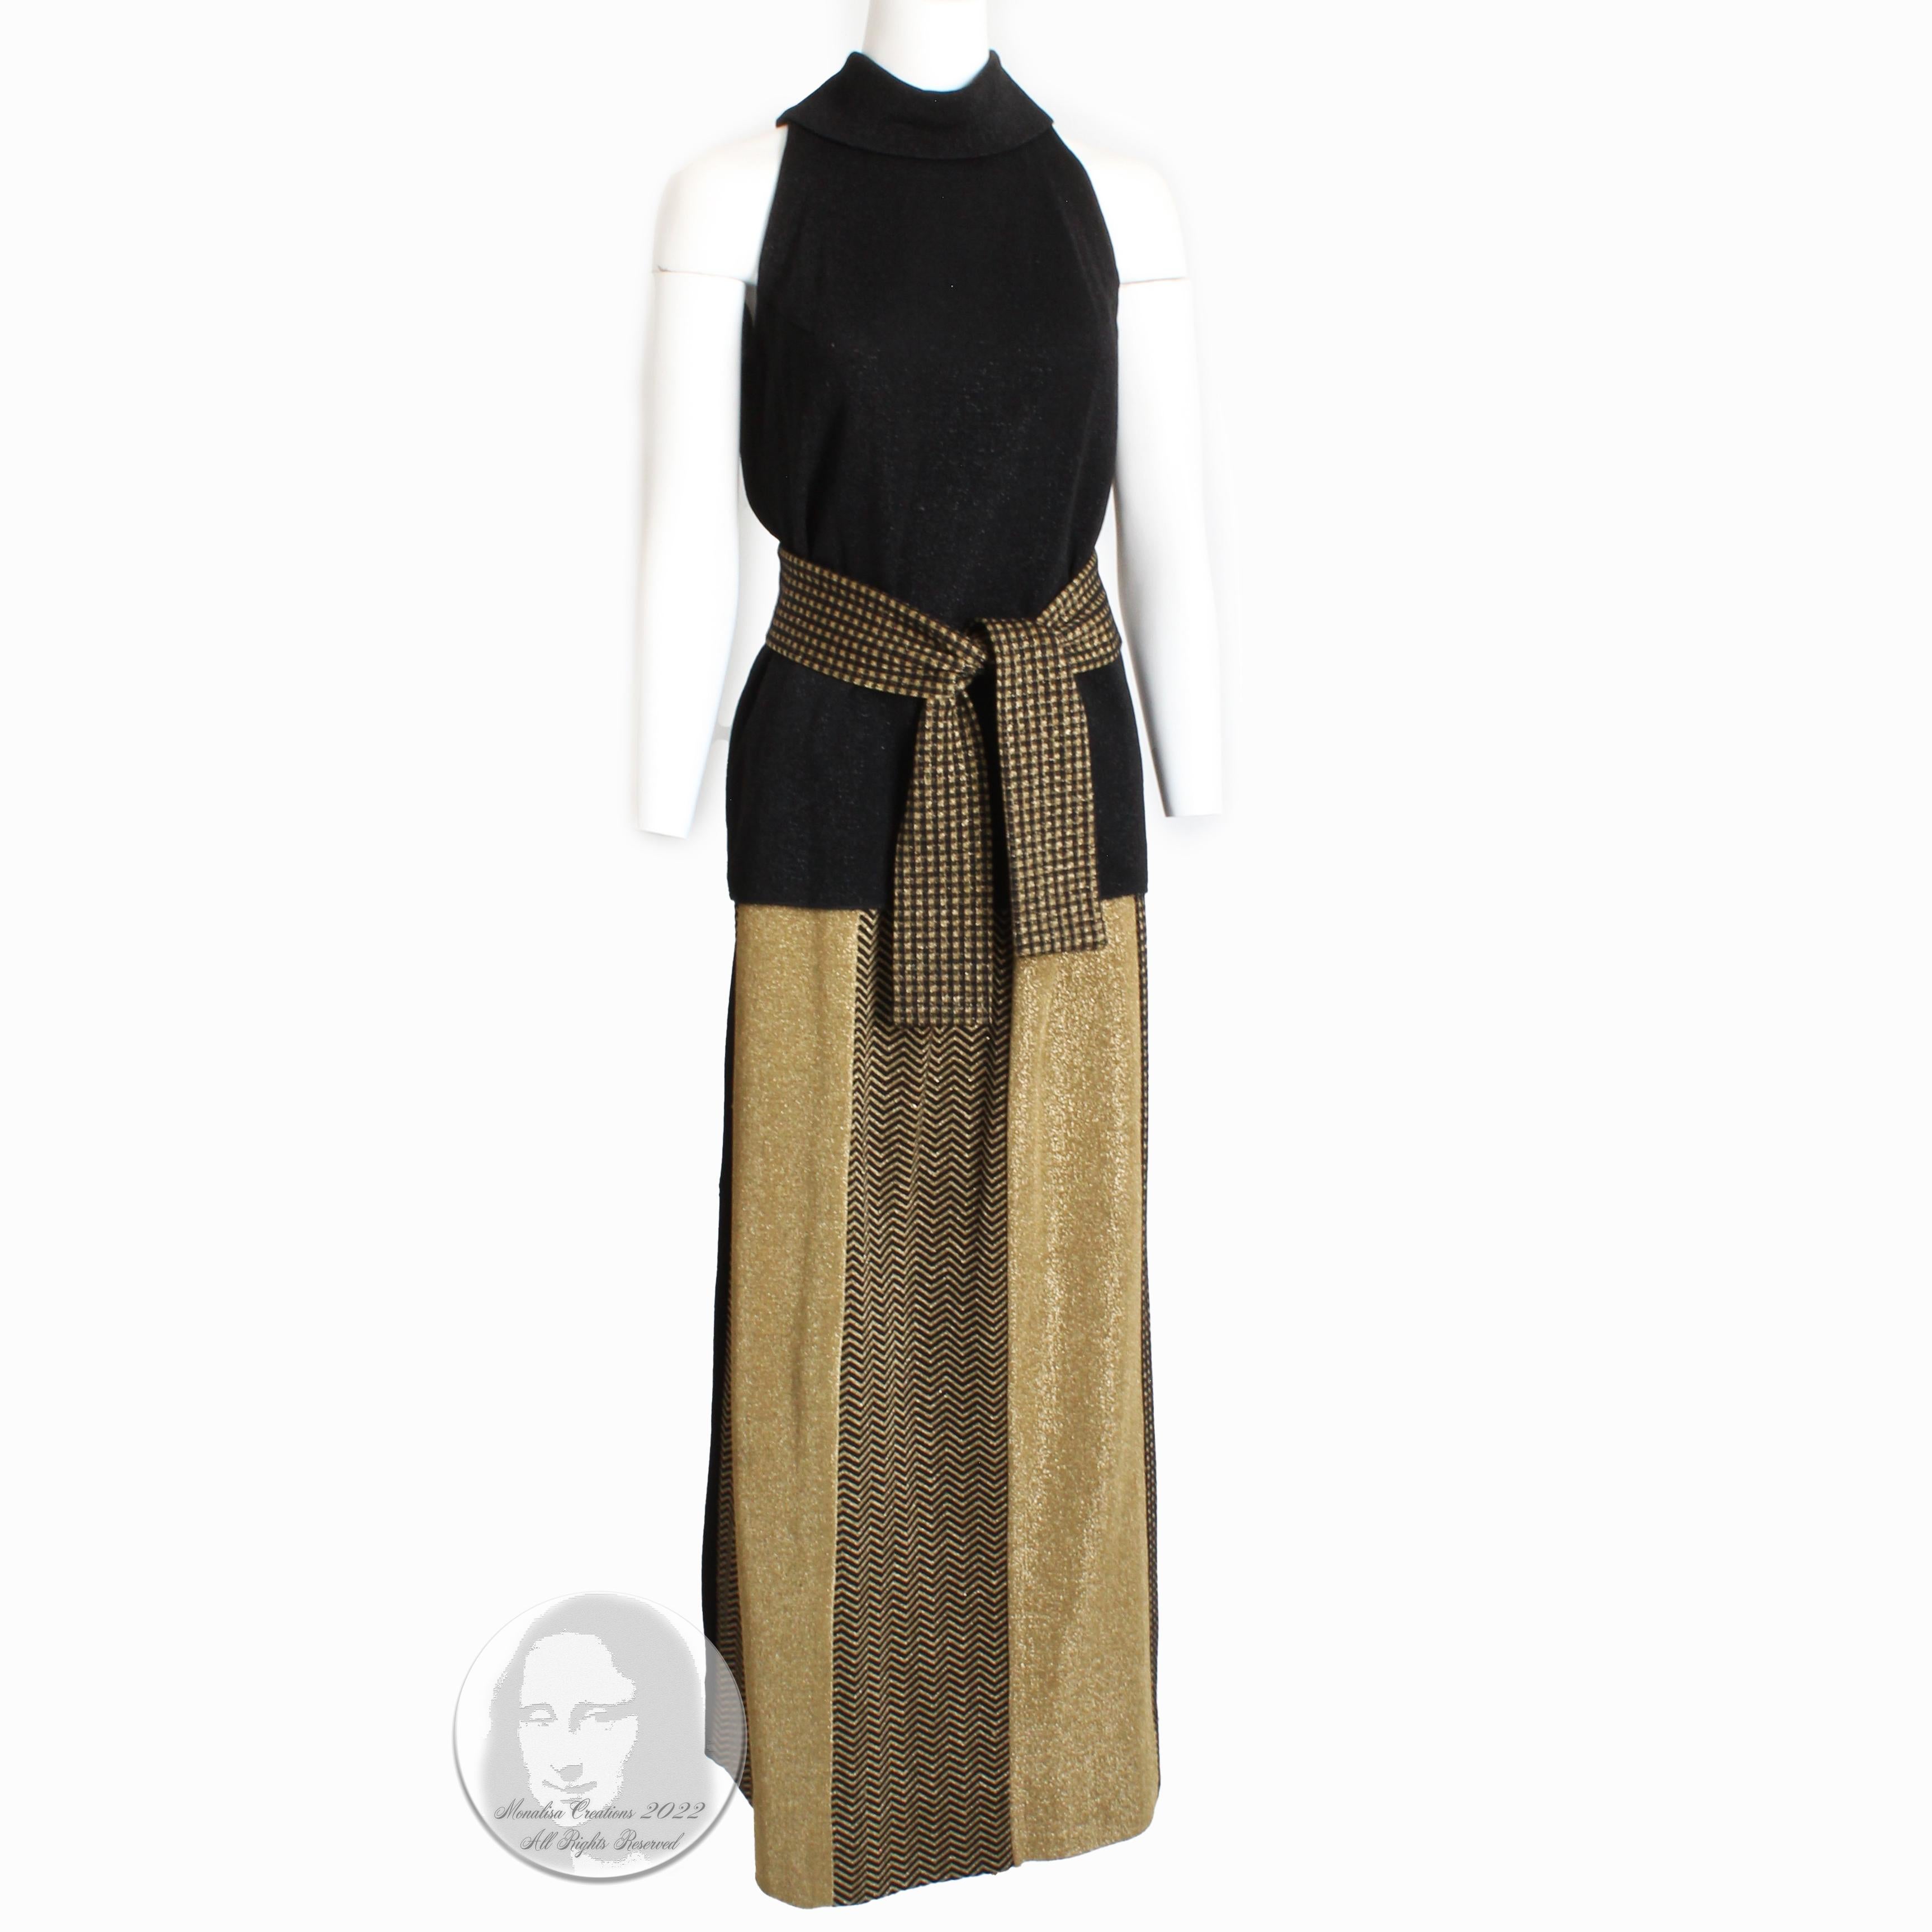 Rudi Gernreich Suit 3pc Top Skirt Sash Belt Black Gold Metallic Knit Vintage 70s 1